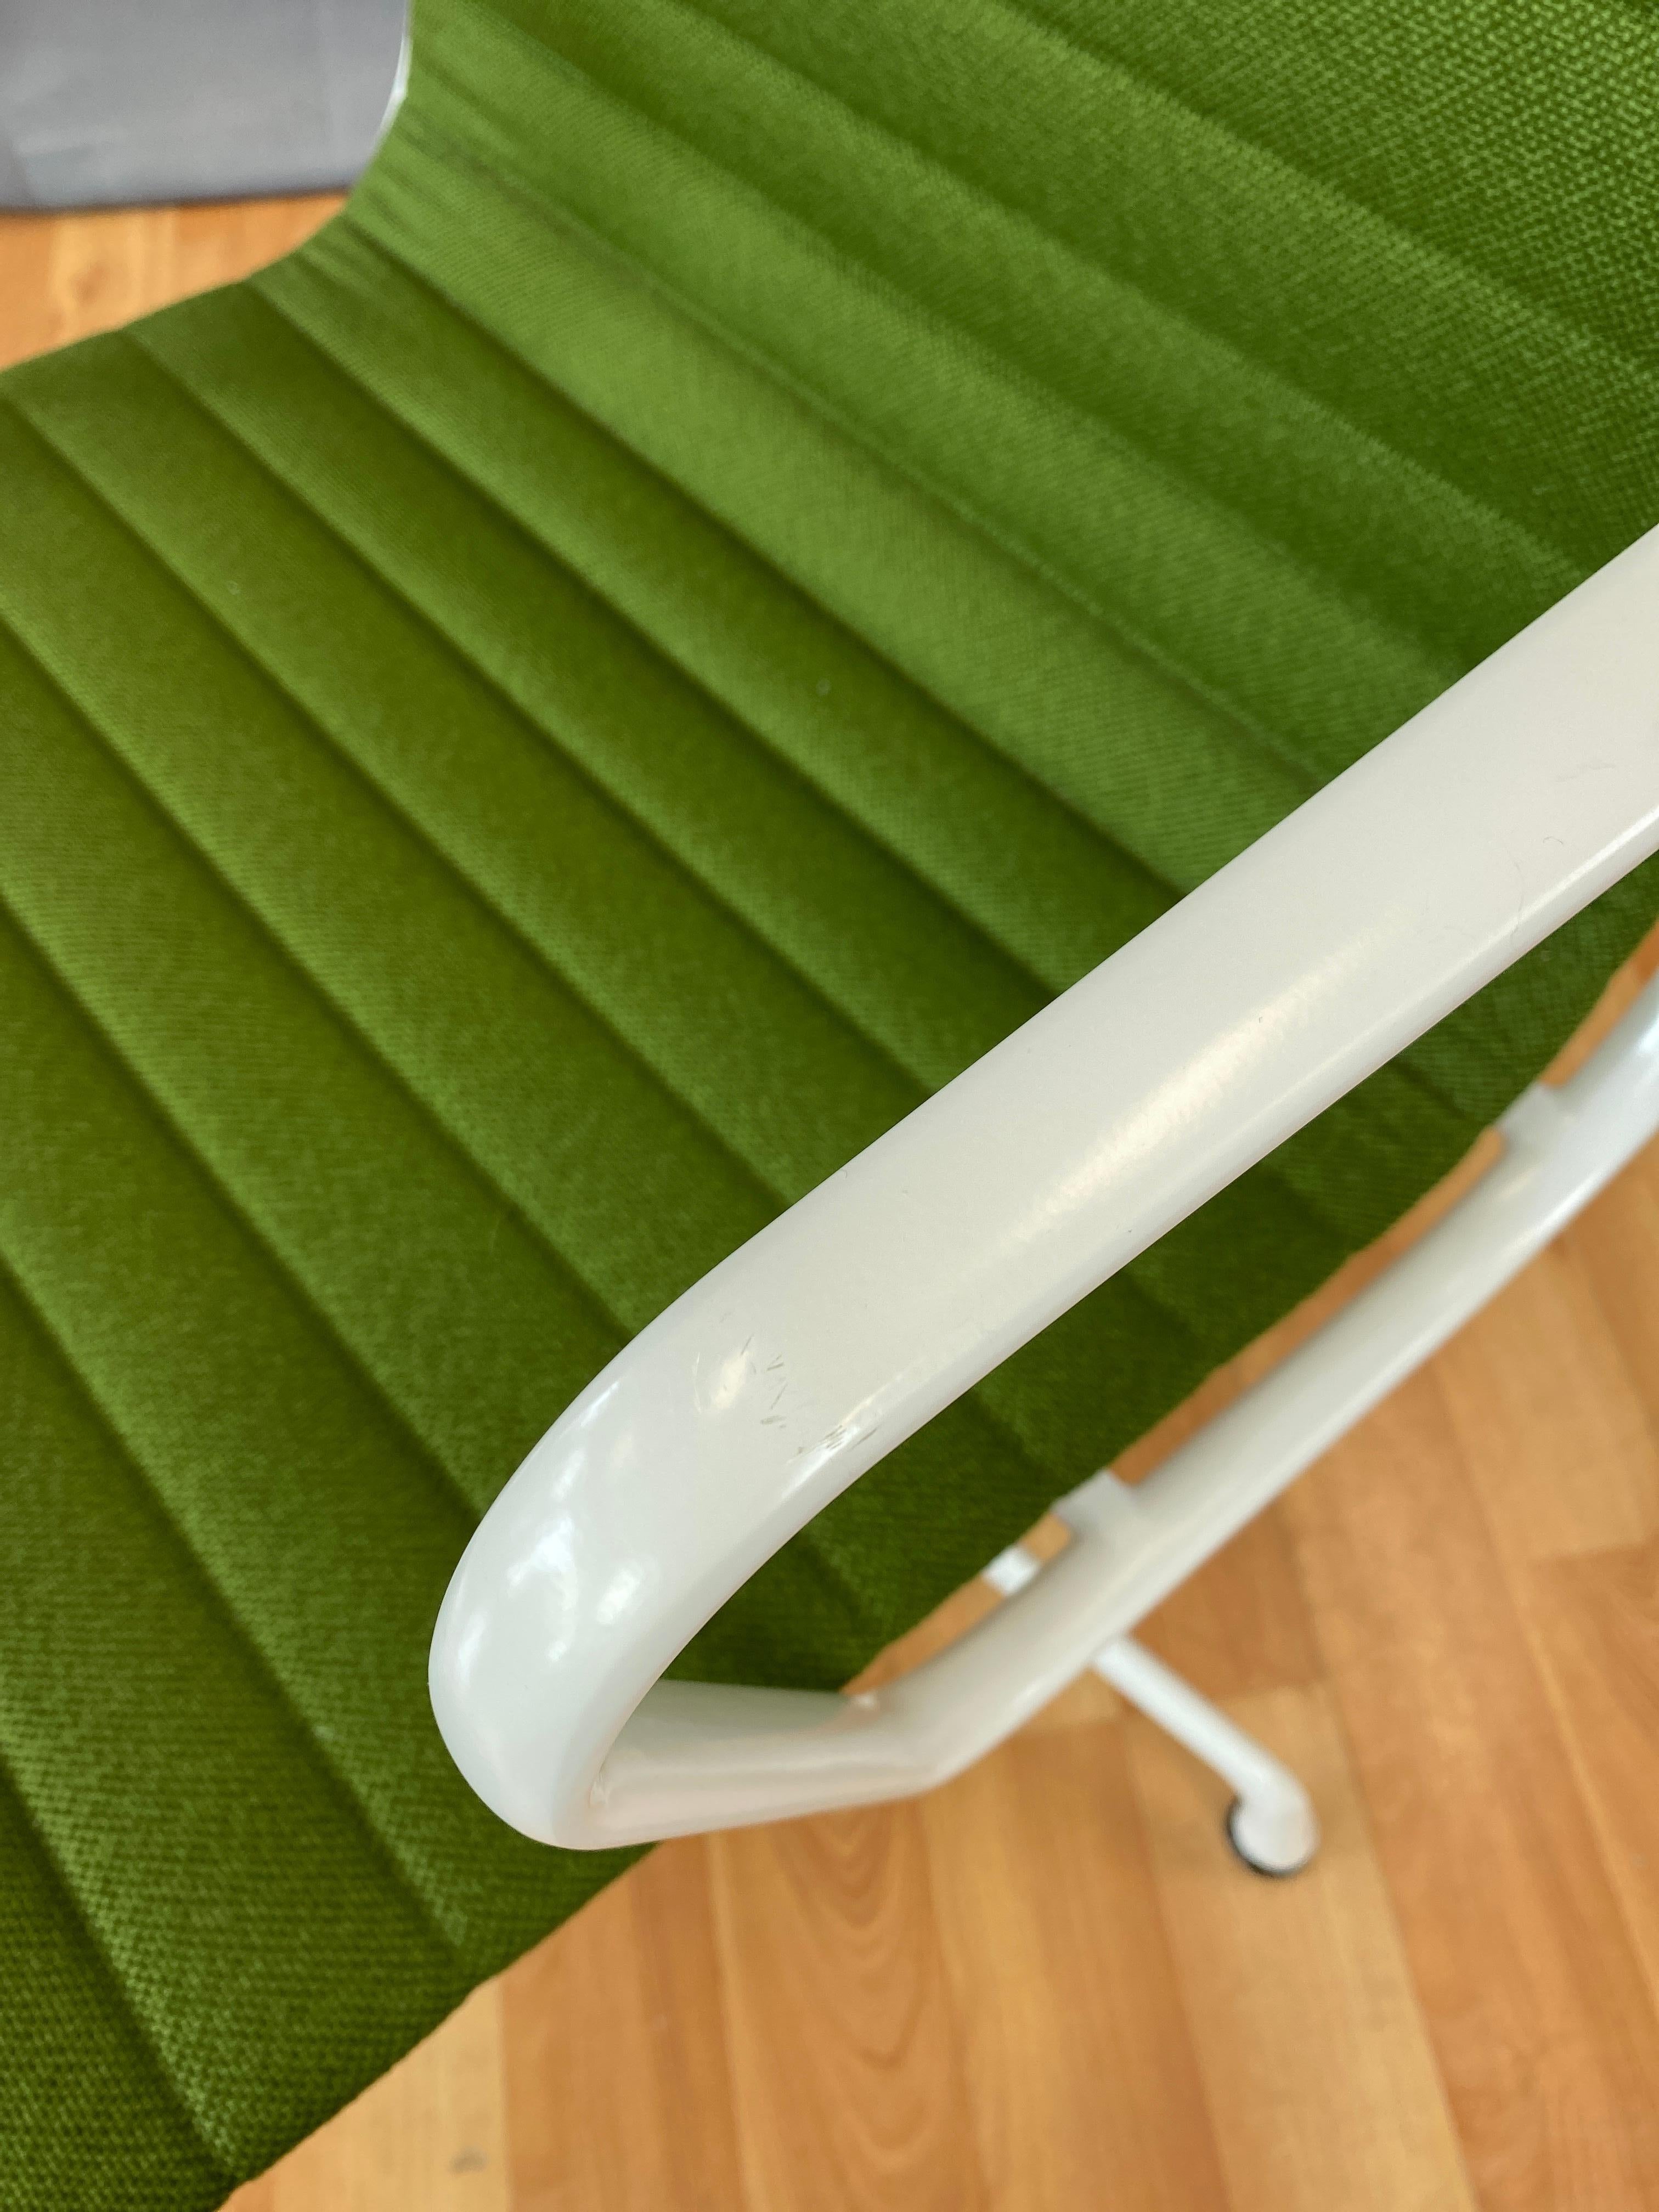 Eames Aluminum Group Side Chair, White Frame, Light Olive Green Upholstery 7